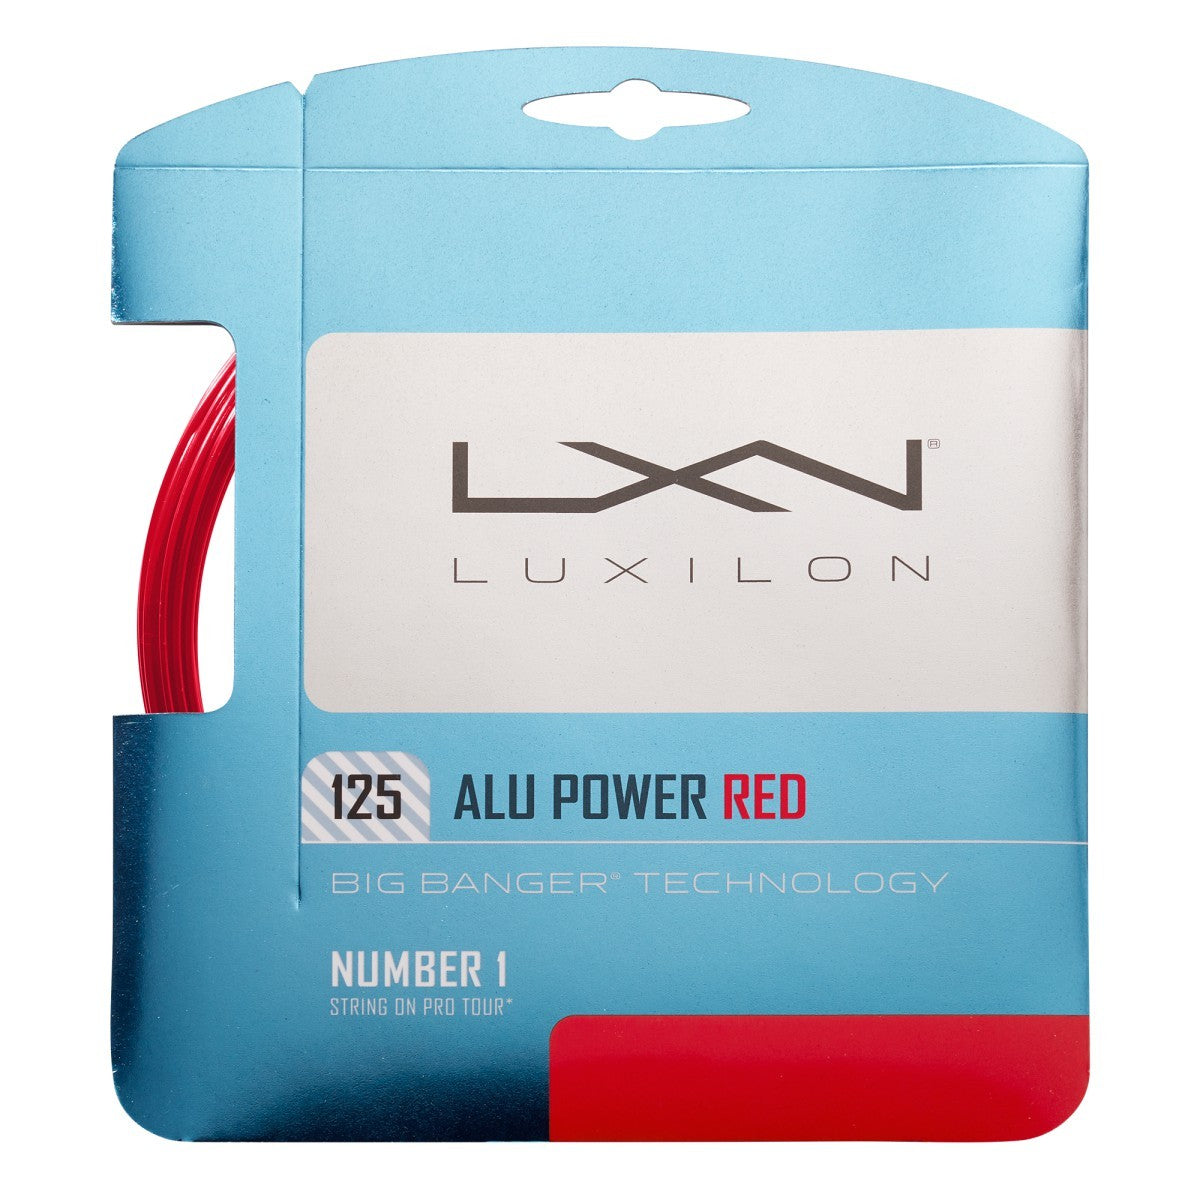 Wilson Luxilon Alu Power 125 Red Tennis String - atr-sports